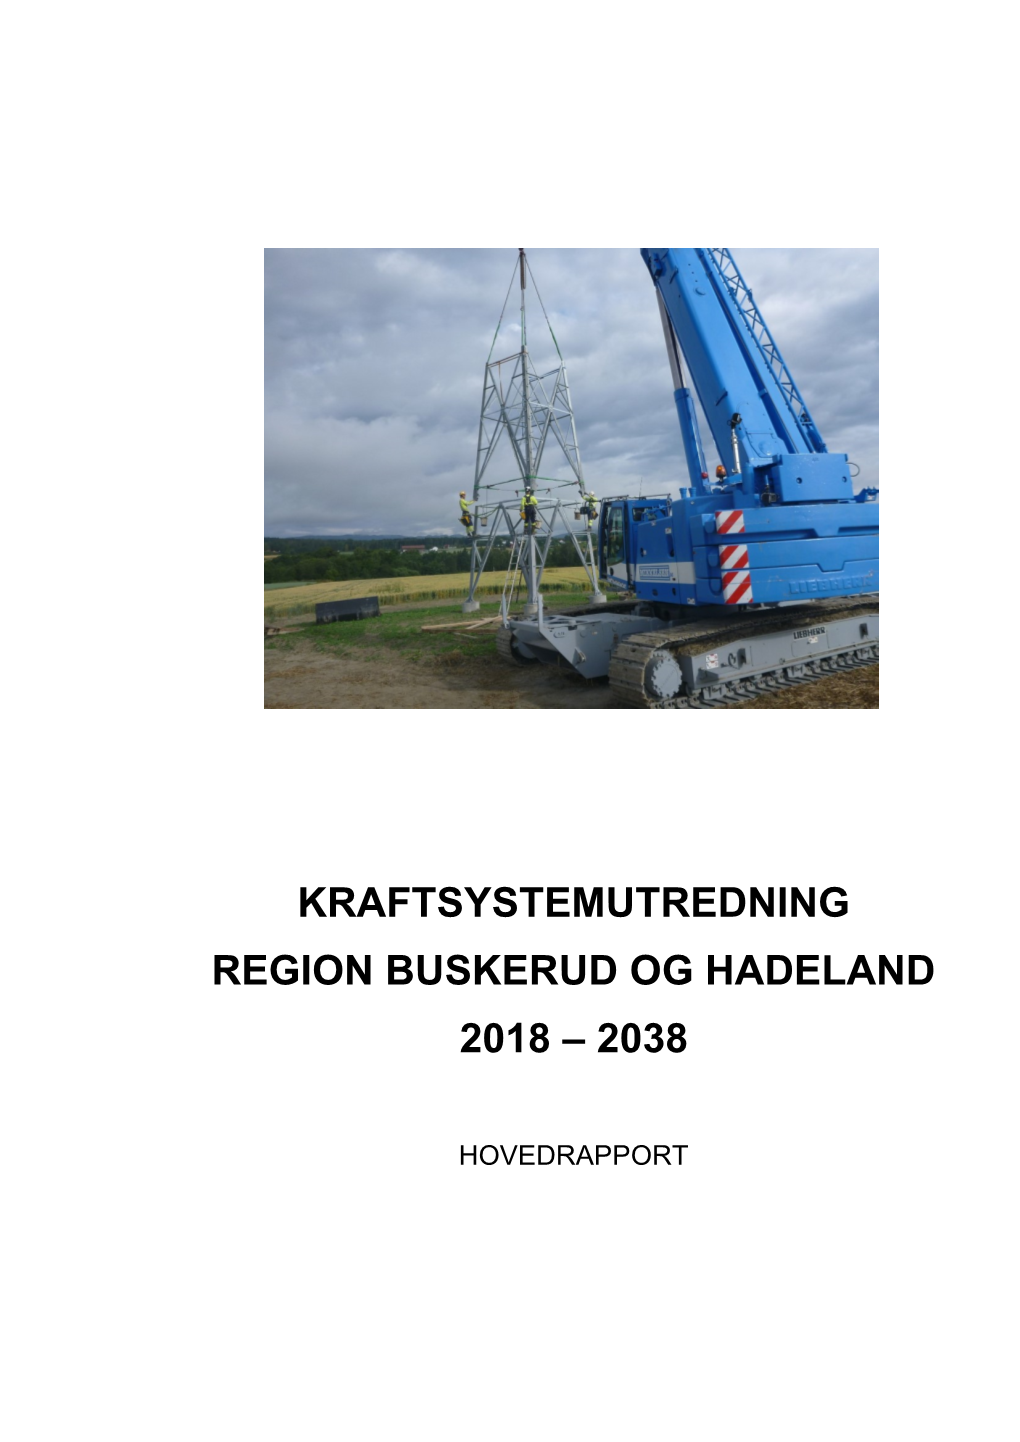 Kraftsystemutredning Region Buskerud Og Hadeland 2018 – 2038